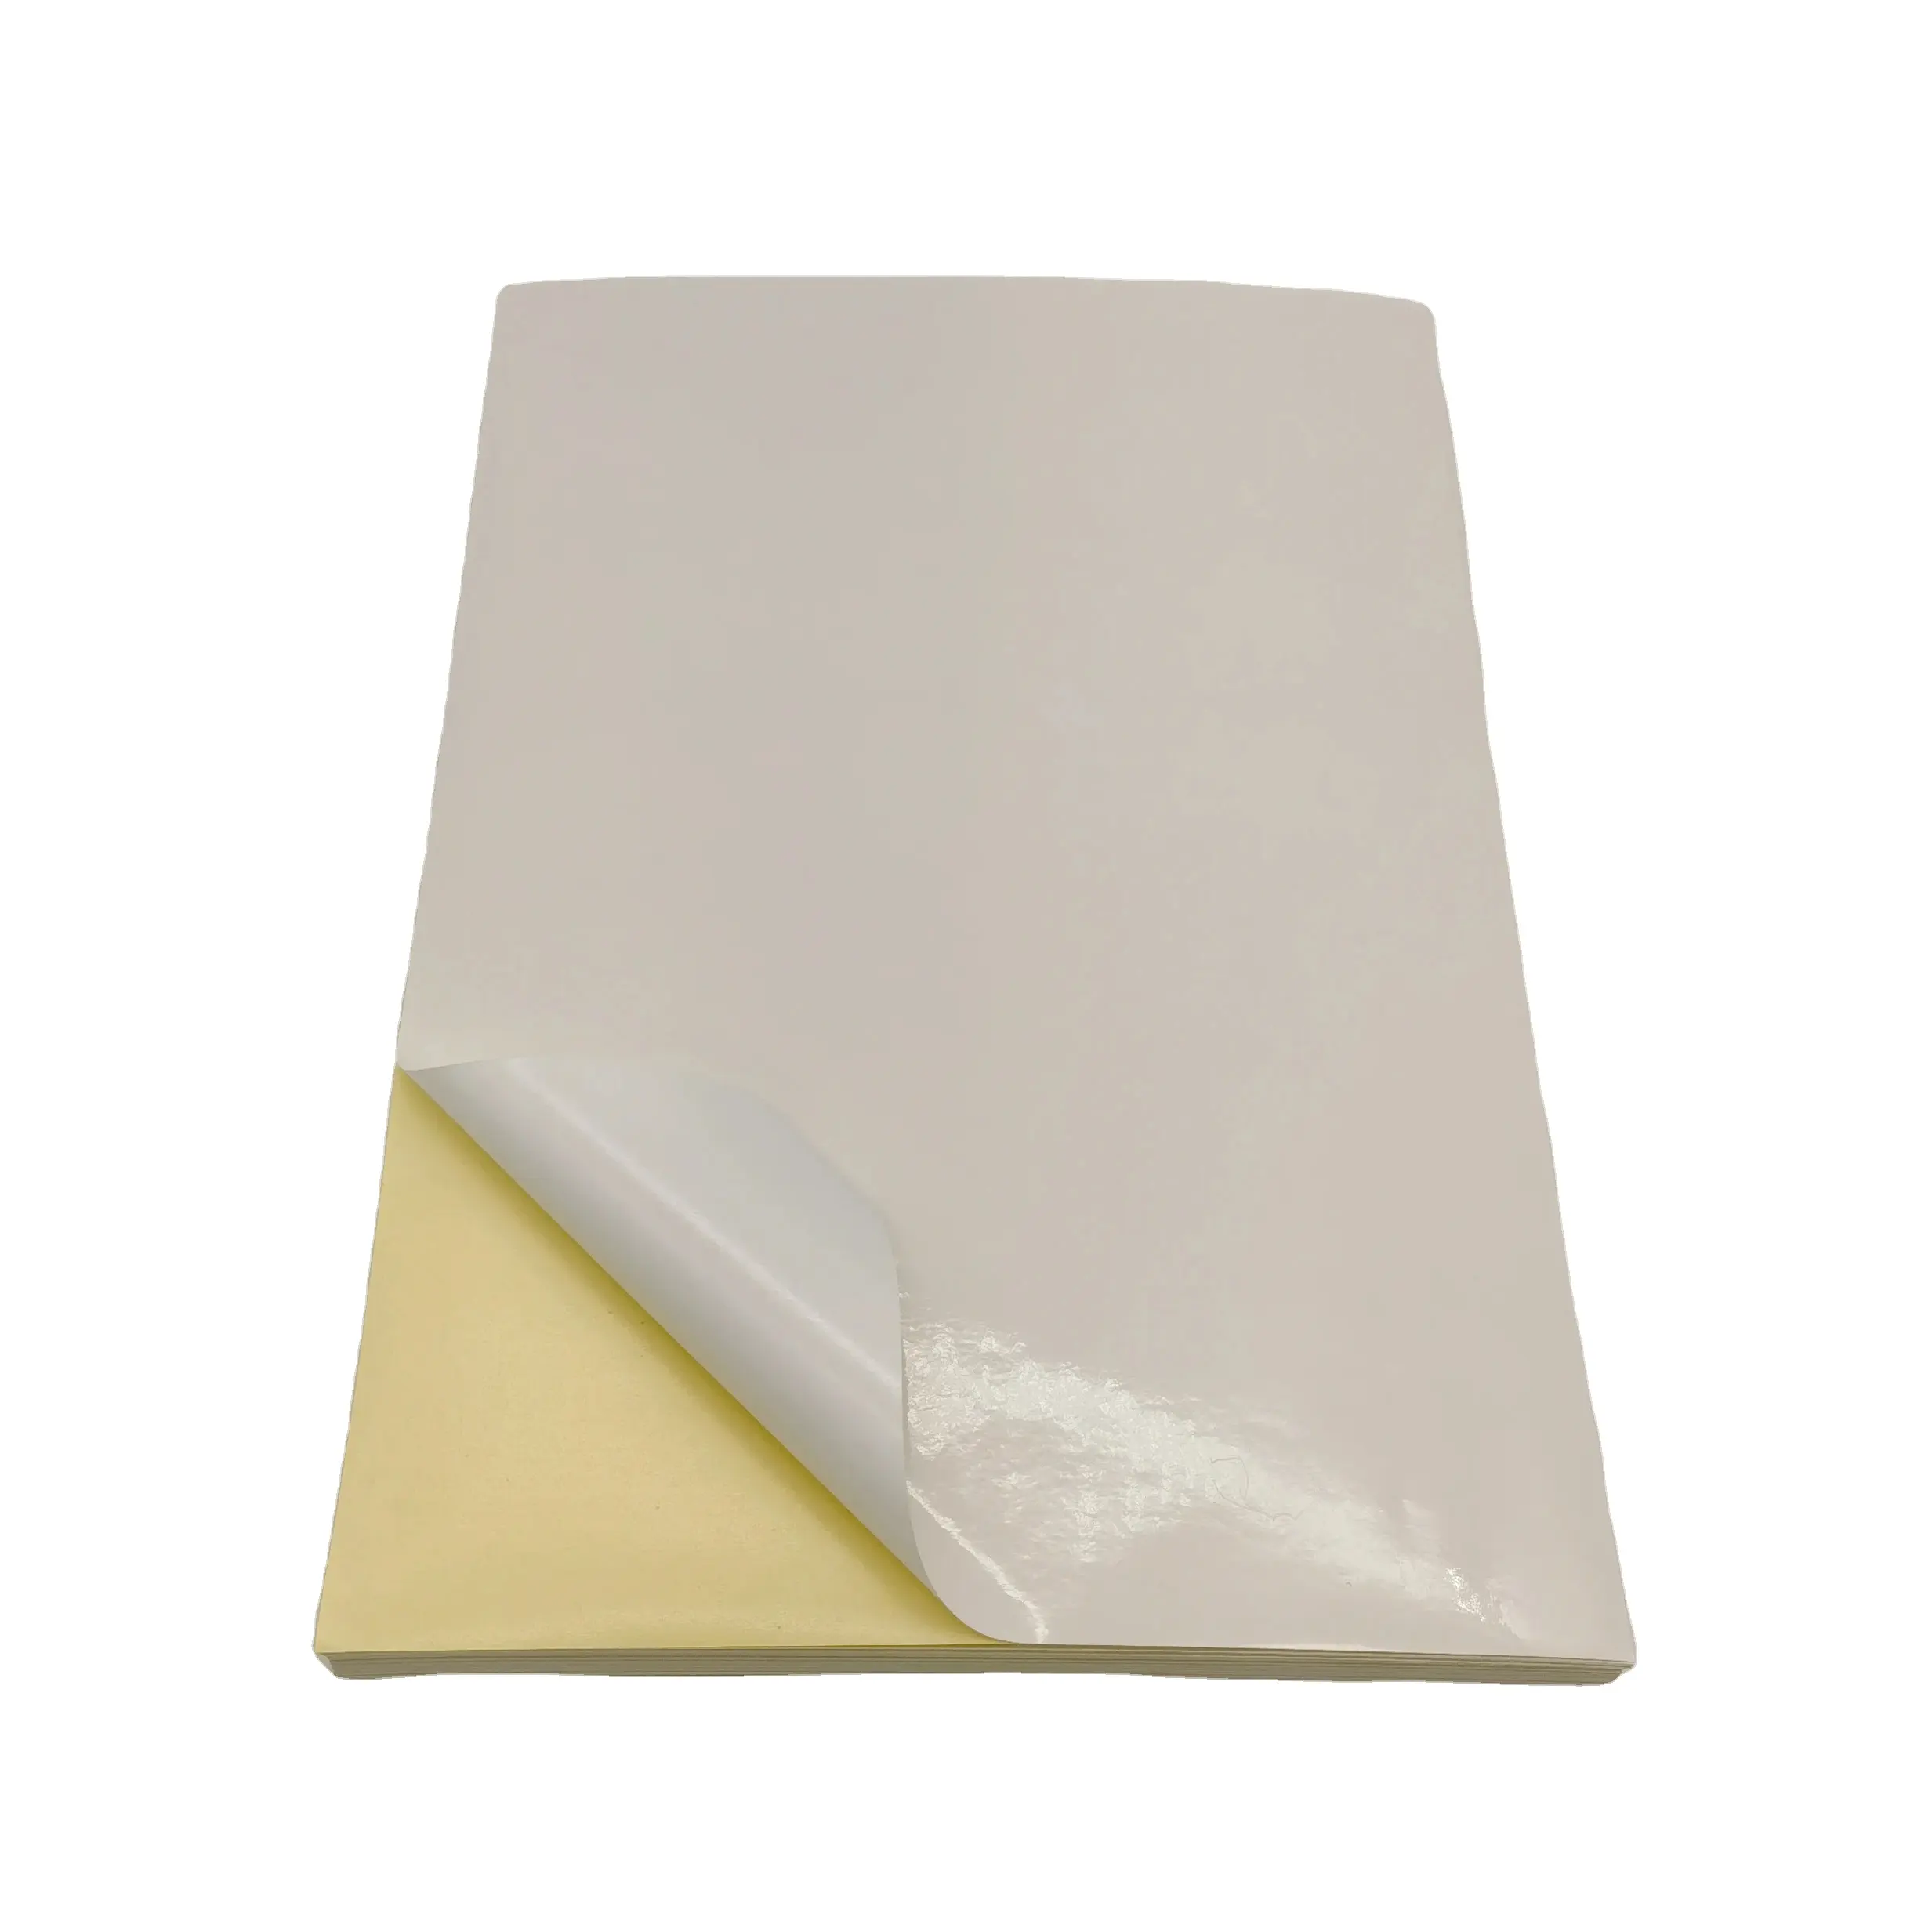 Carta adesiva patinata bianca lucida stampata Premium 100 fogli Laser/carta termica trasparente a getto d'inchiostro